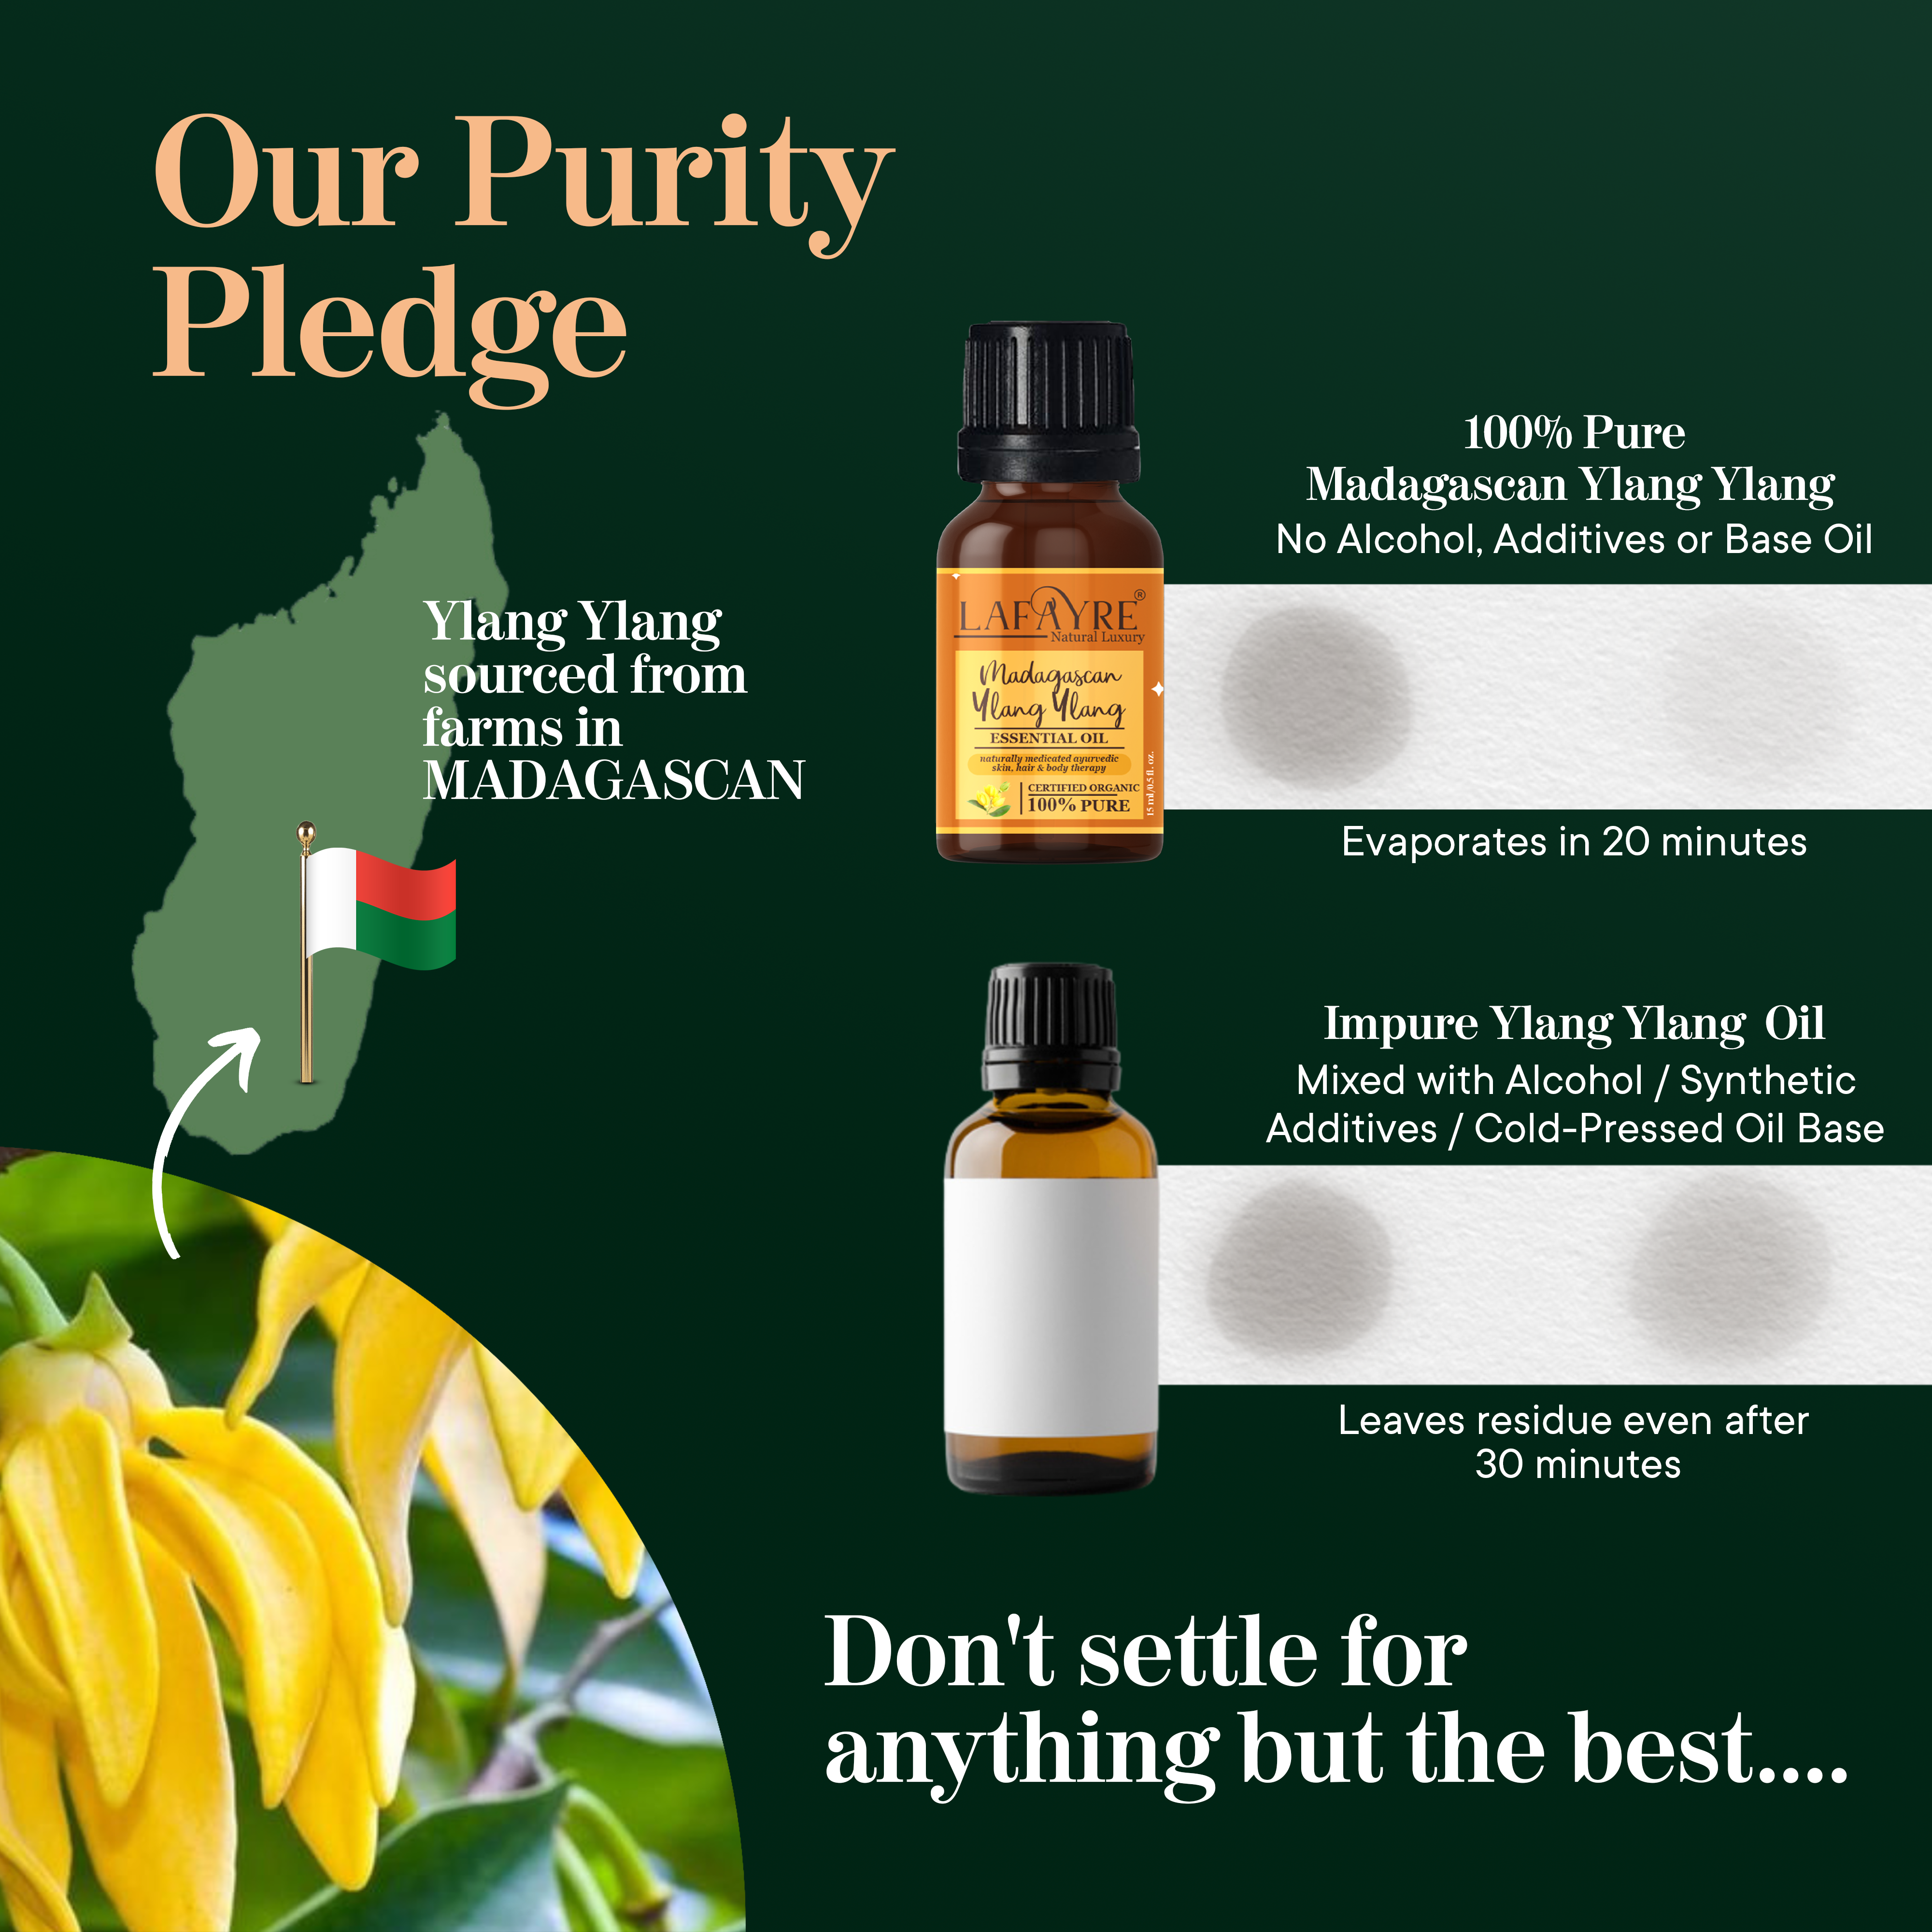 Madagascan Ylang Ylang Essential Oil Pledge